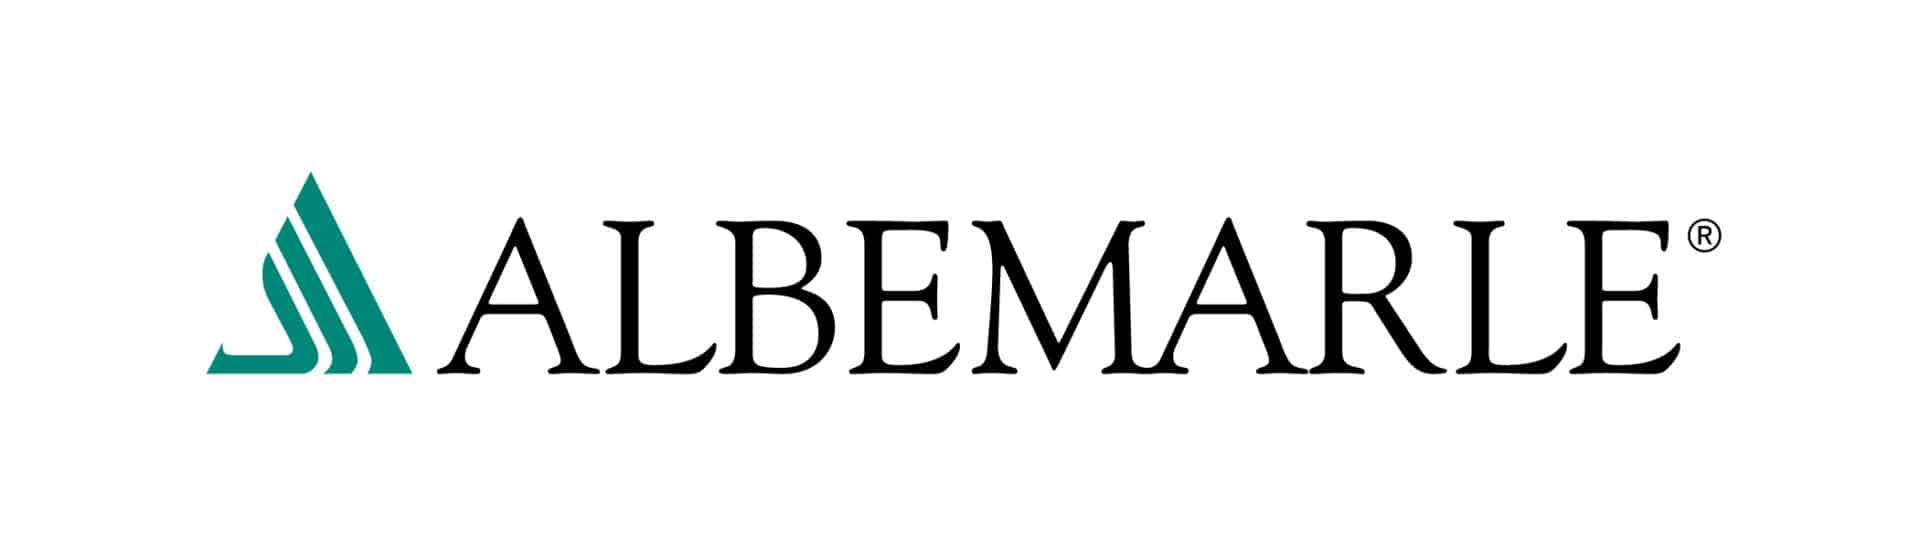 Albemarle_Logo